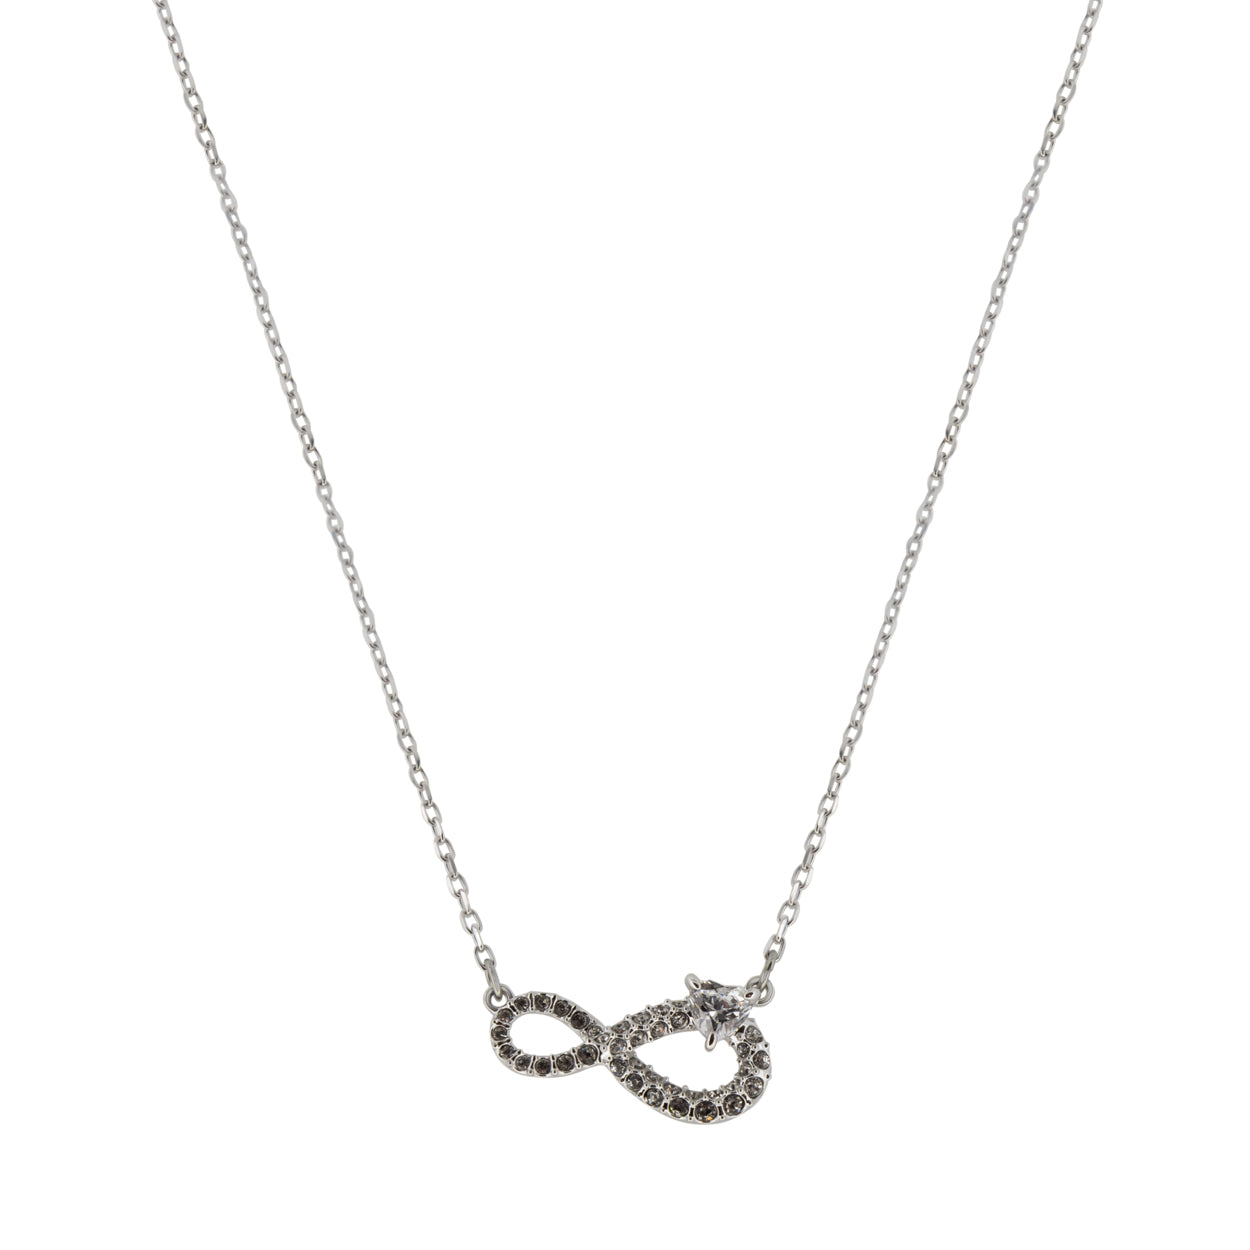 Swarovski White Infinity Necklace 5538102